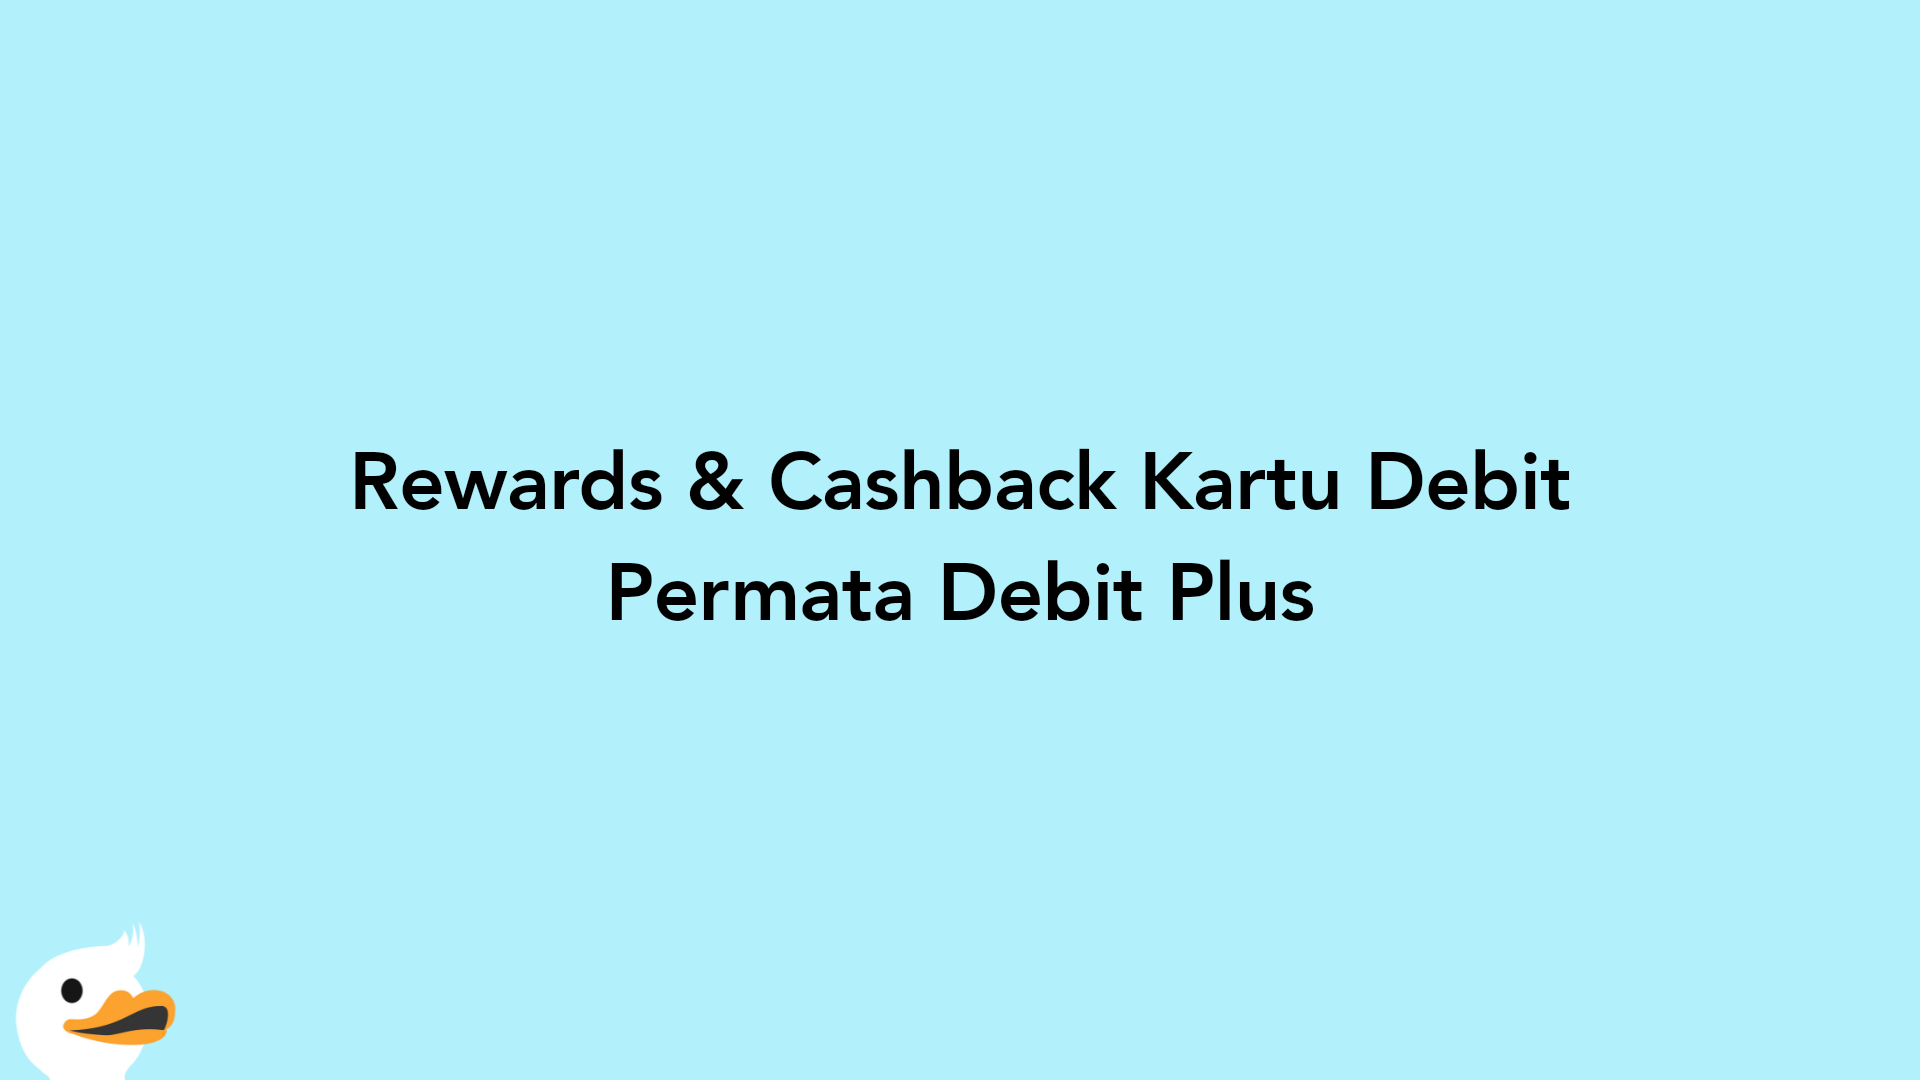 Rewards & Cashback Kartu Debit Permata Debit Plus